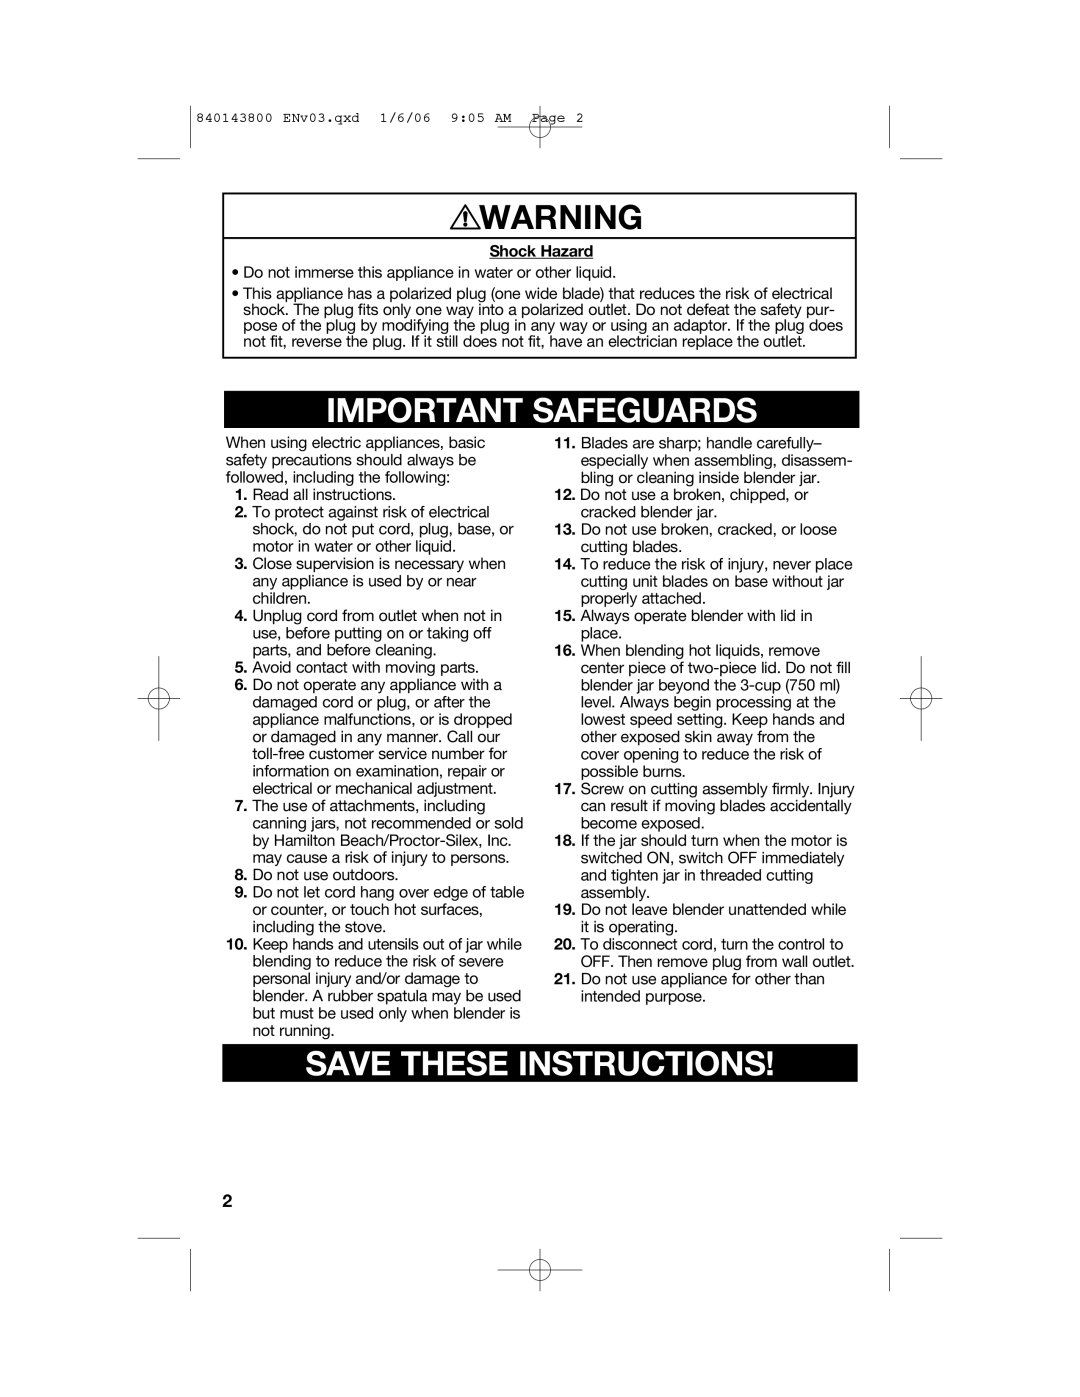 Hamilton Beach 840143800 manual Important Safeguards, Save These Instructions, Shock Hazard 